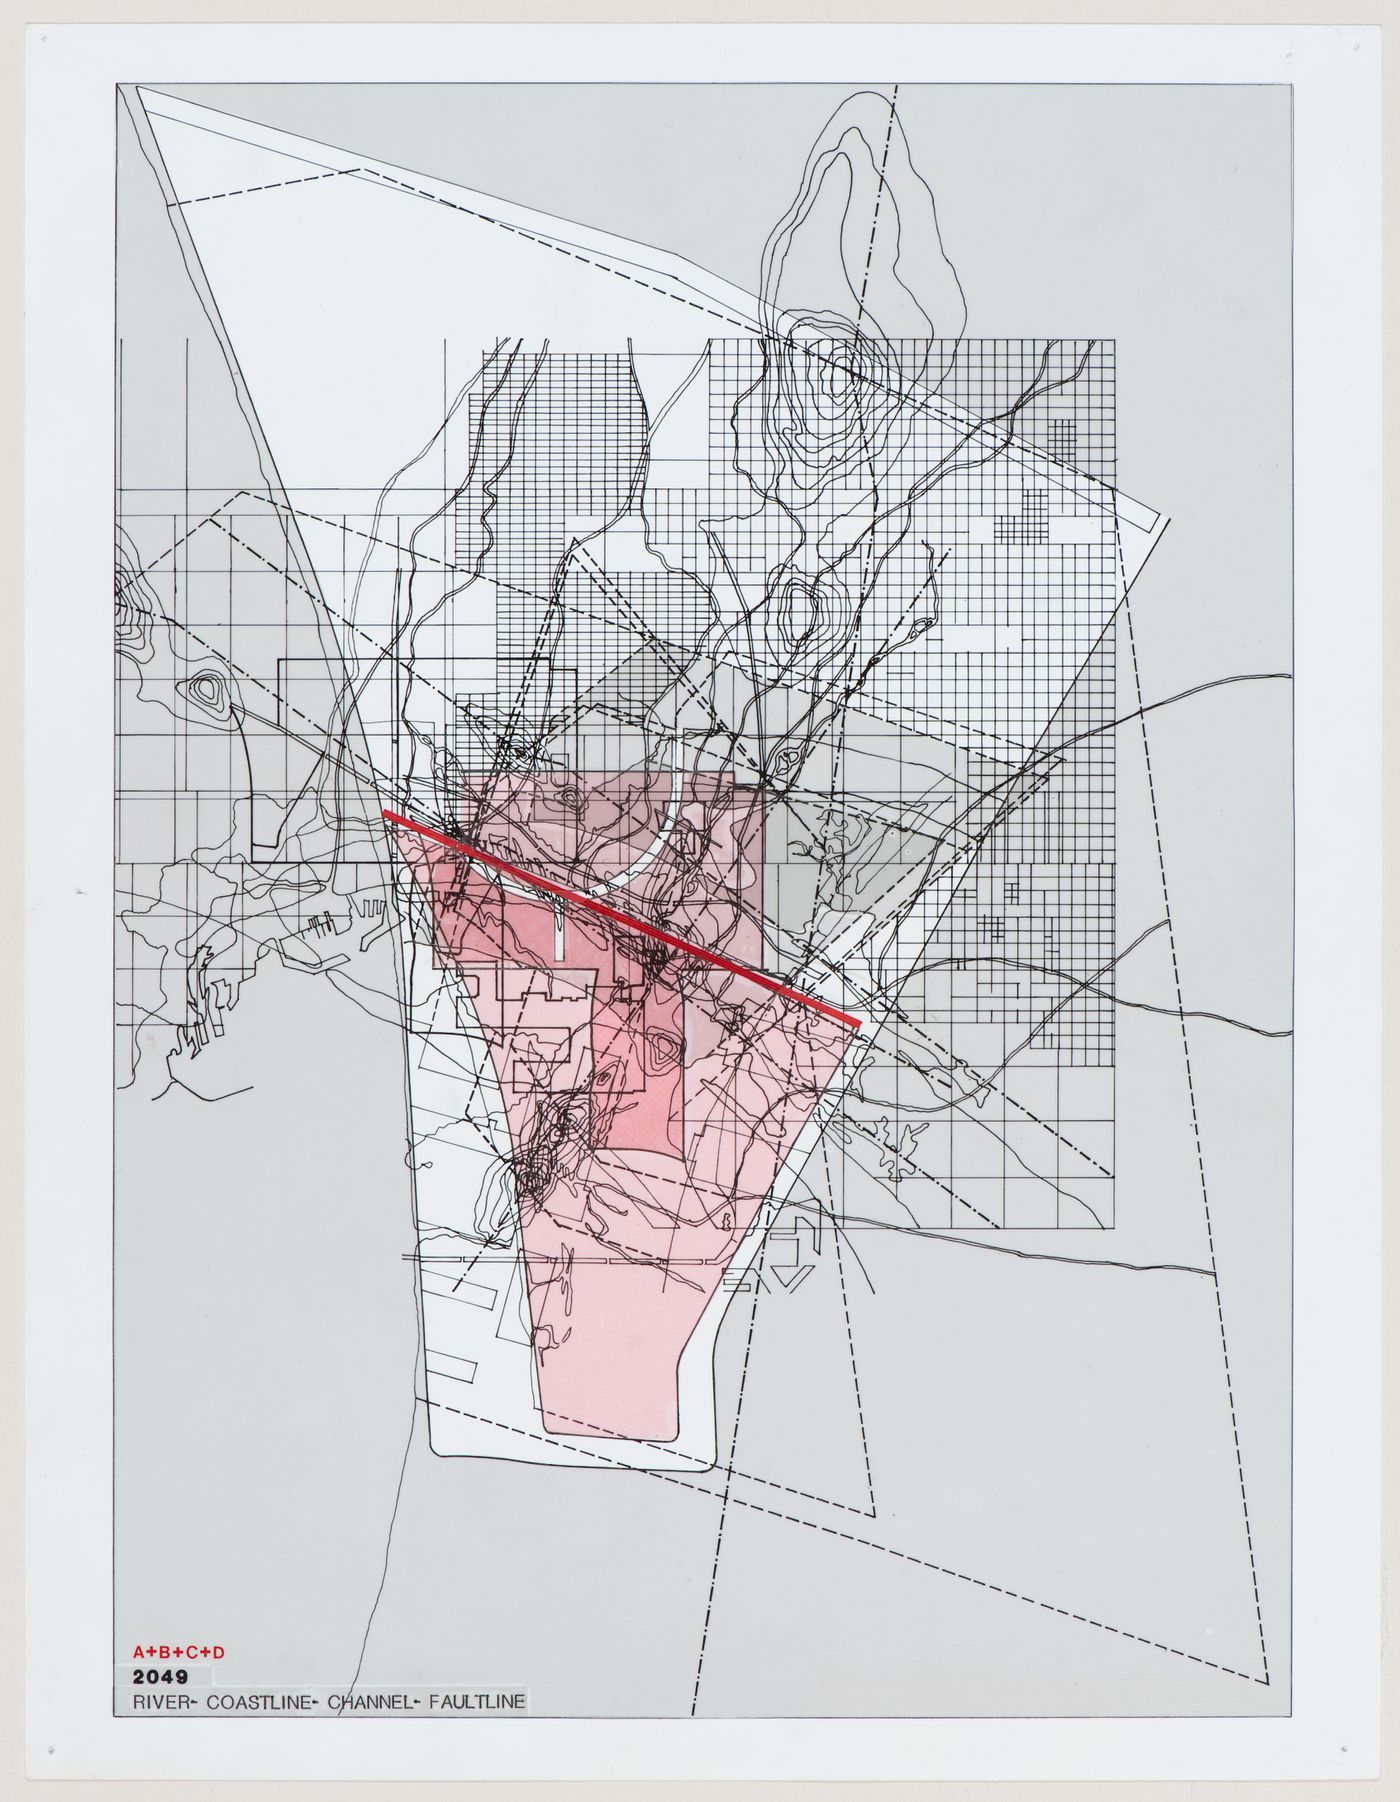 Topographic survey for University Art Museum, Long Beach, California